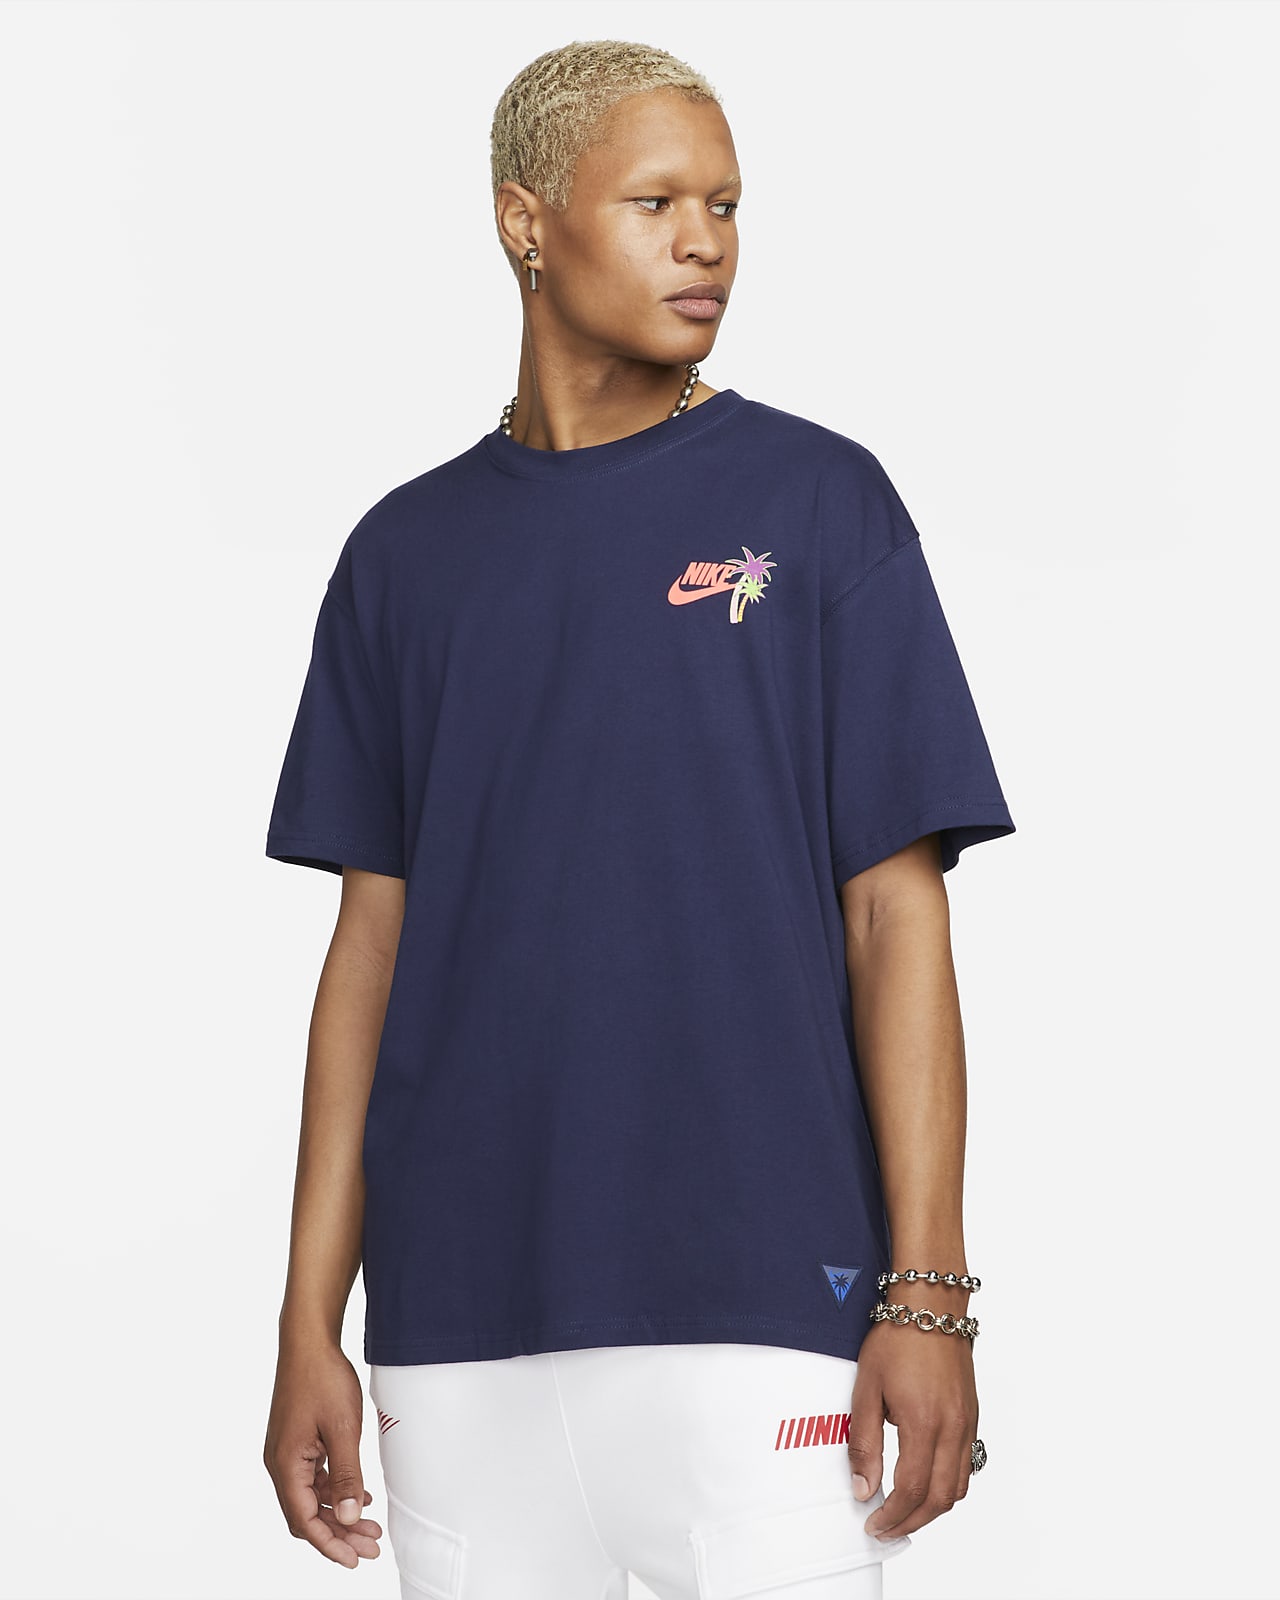 Vintage Nike Baseball White T-Shirt Men’s Size Large